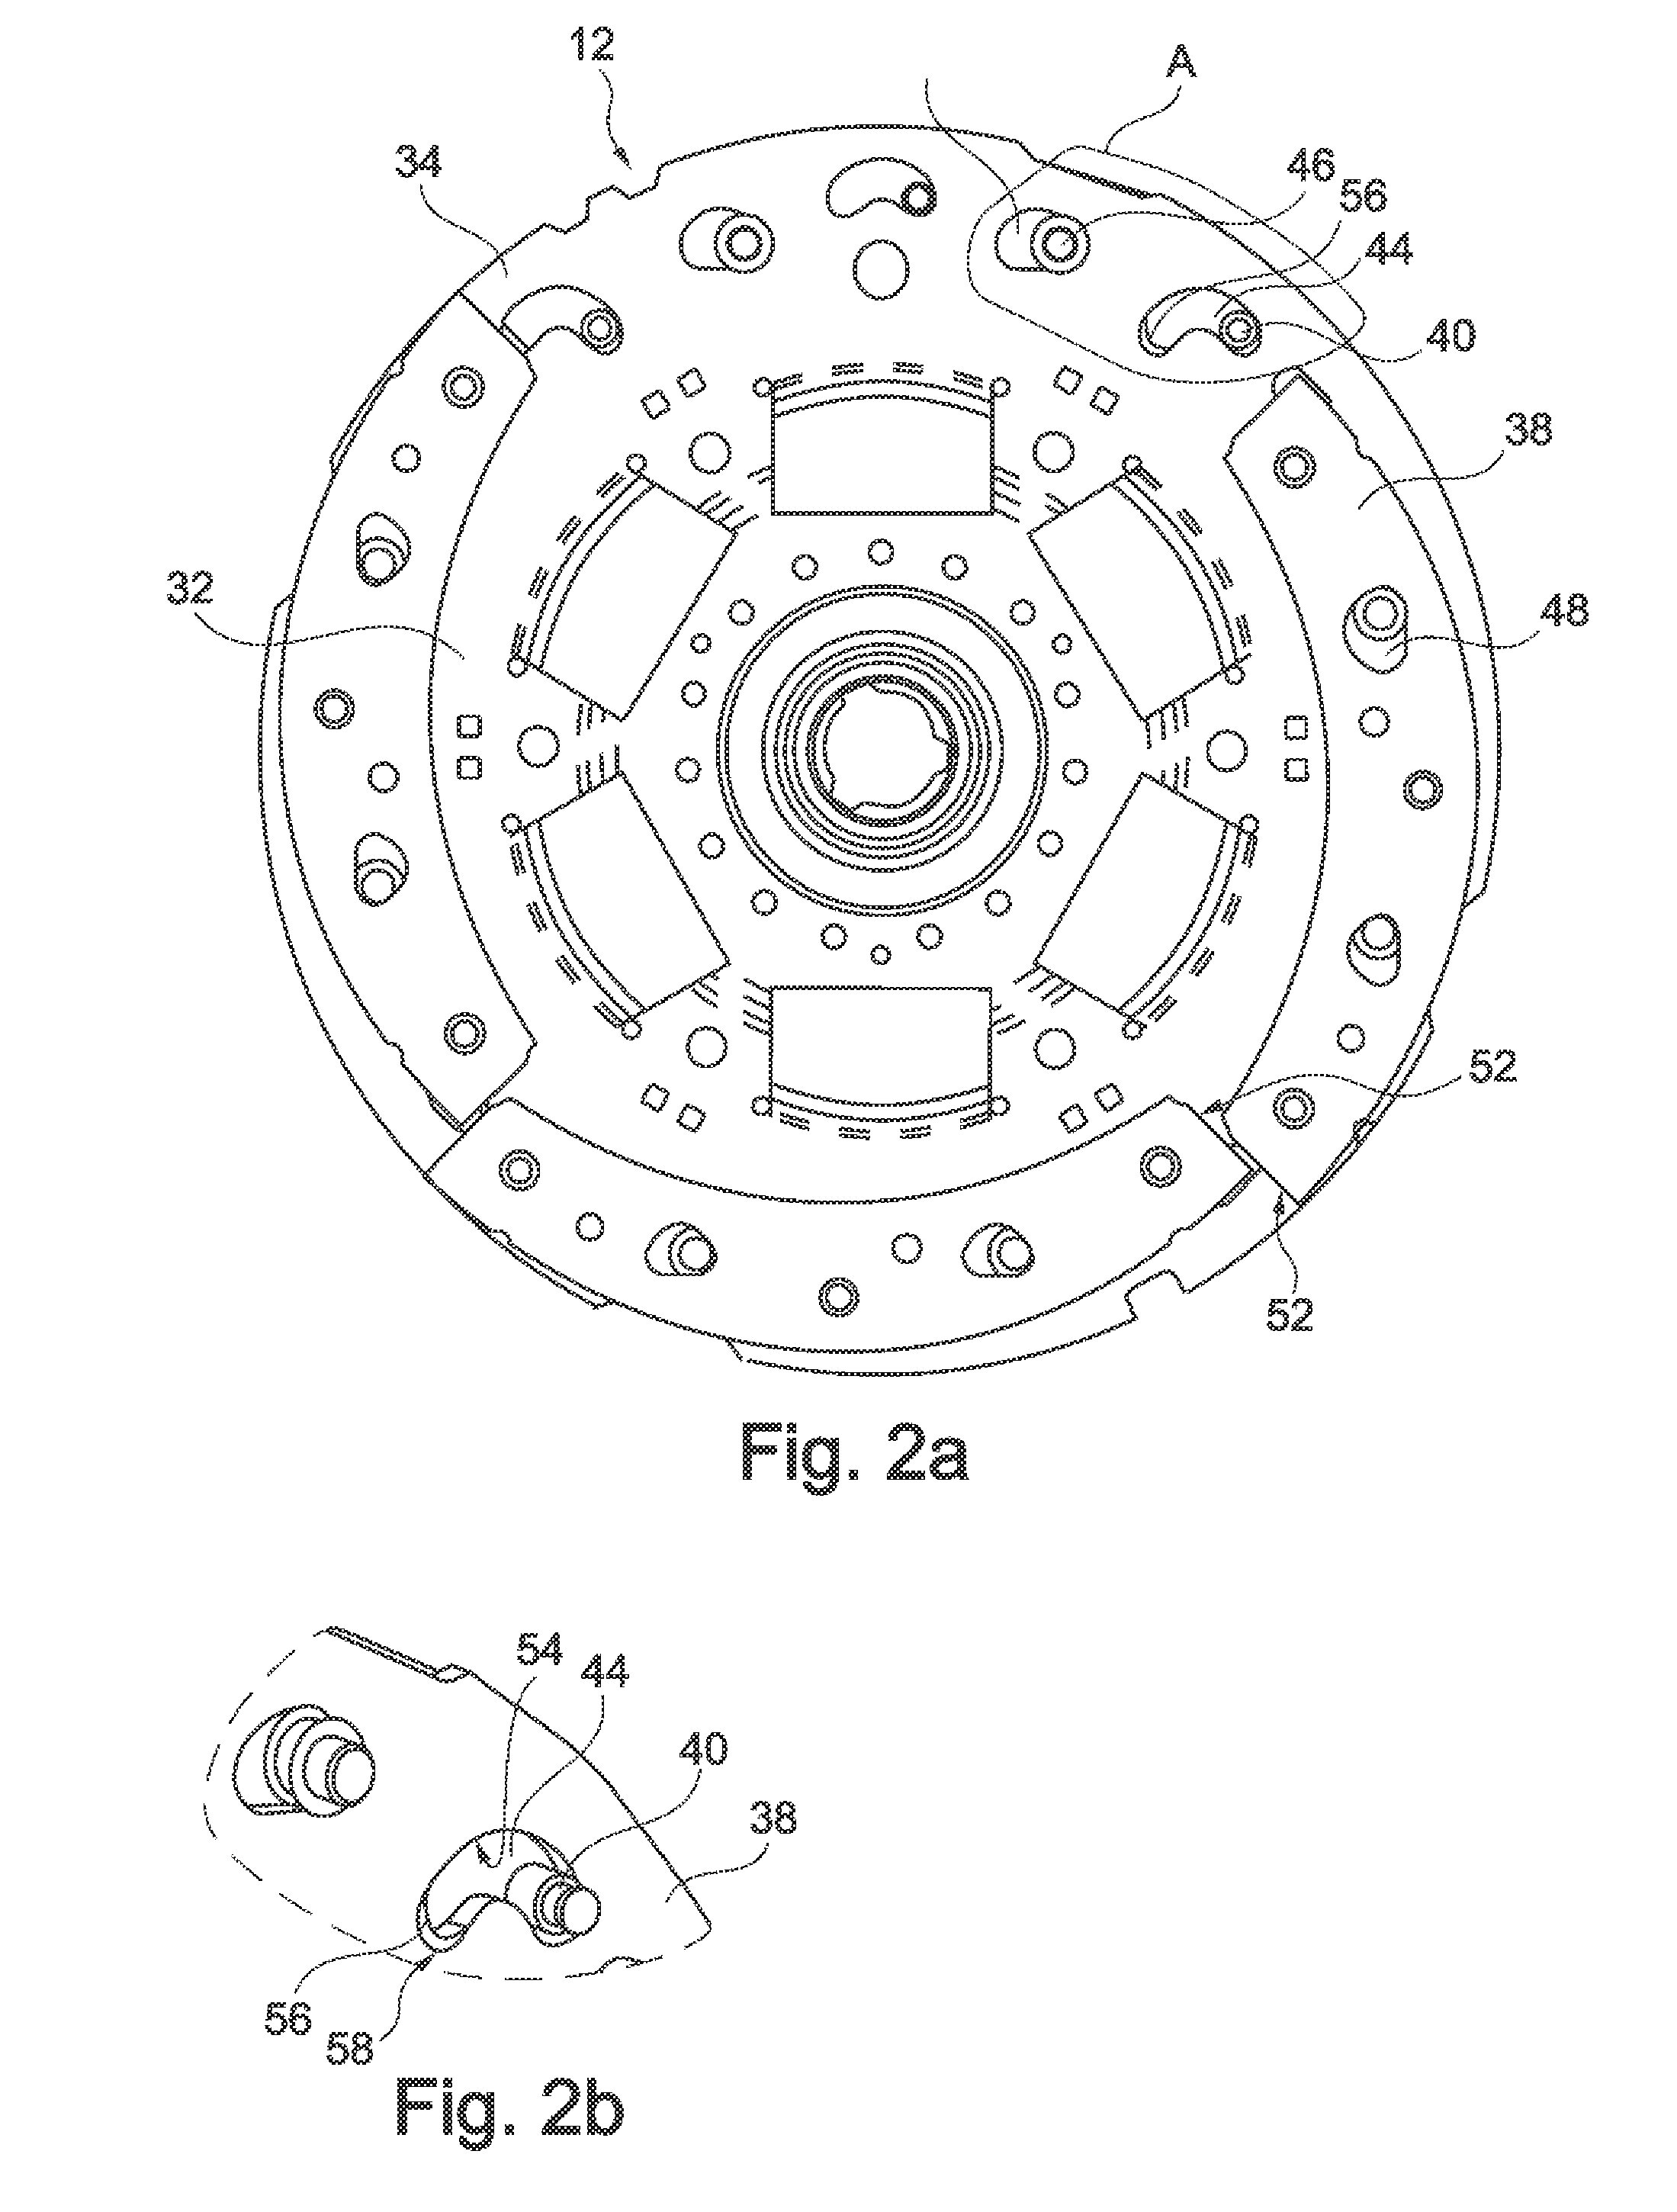 Centrifugal pendulum mechanism